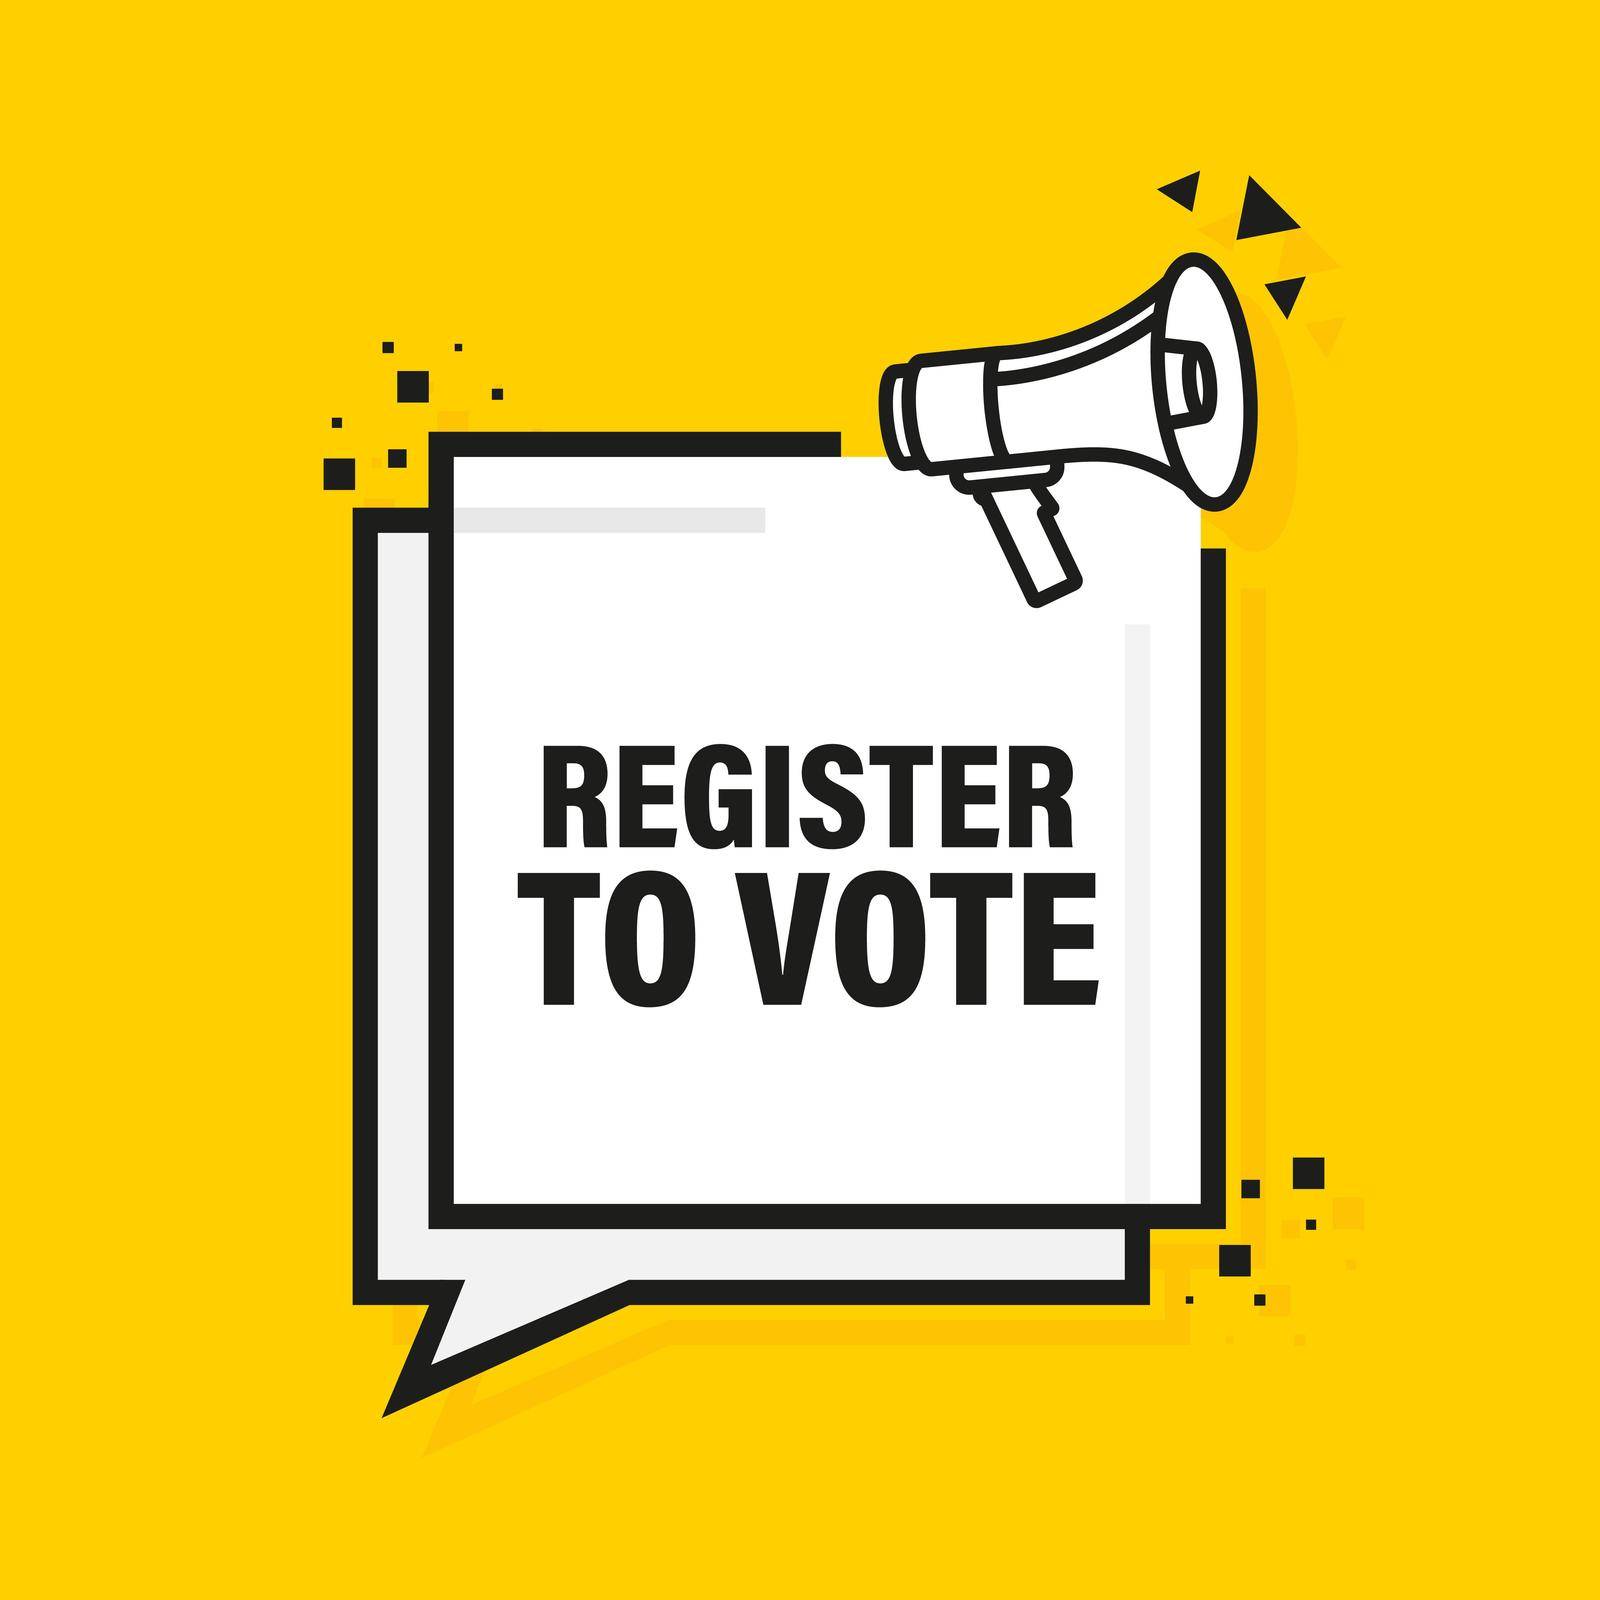 Register to vote megaphone yellow banner. Vector illustration